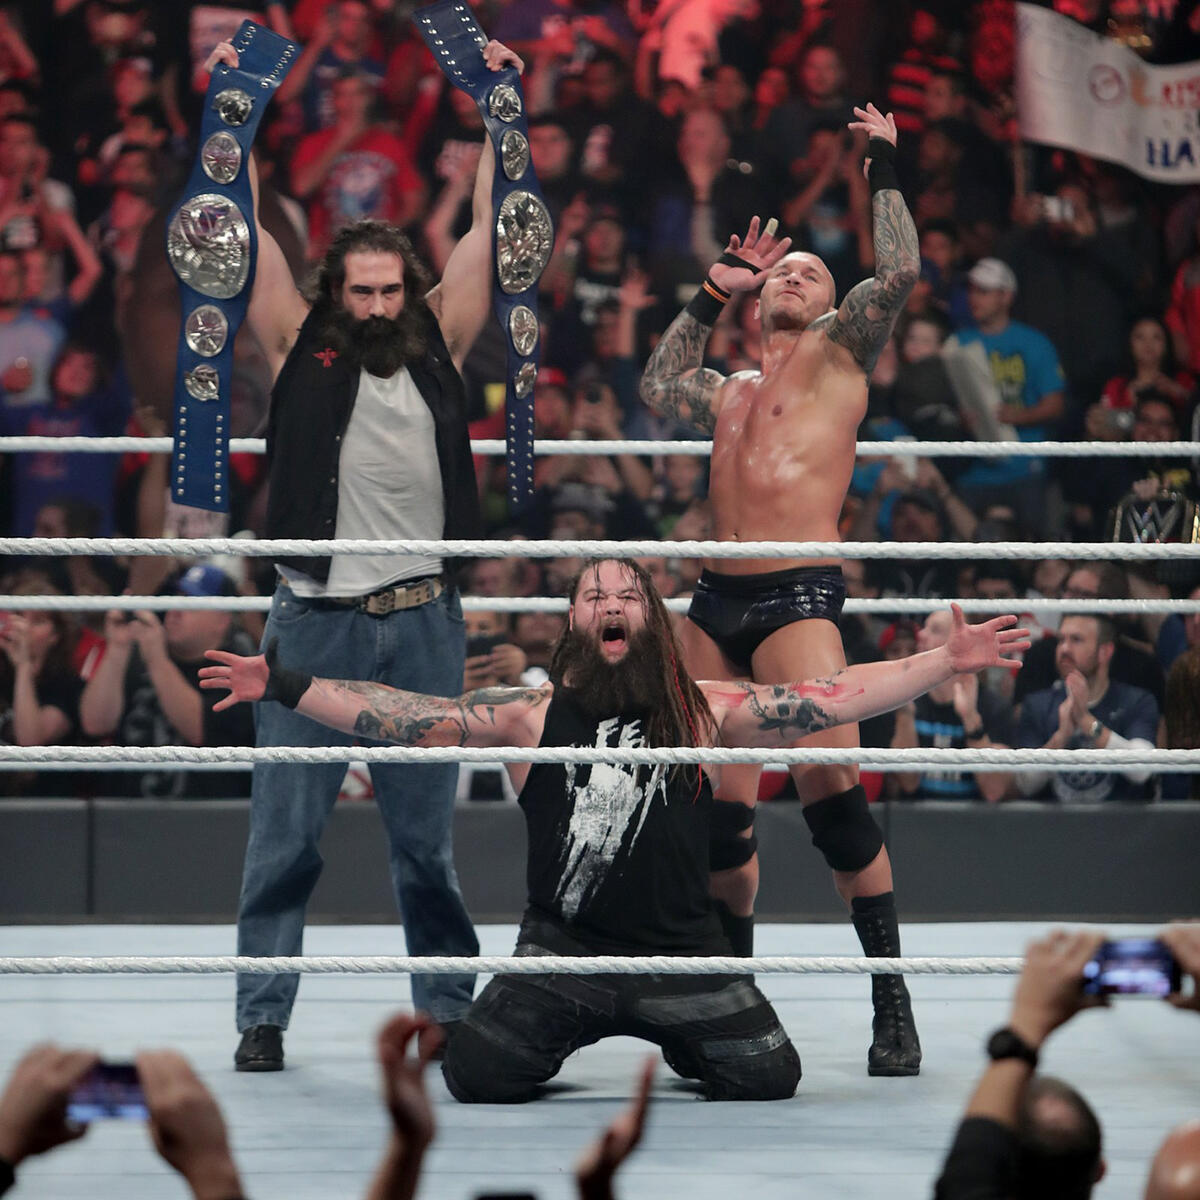 The era of Wyatt & Orton as SmackDown Tag Team Champions officially kicks off.